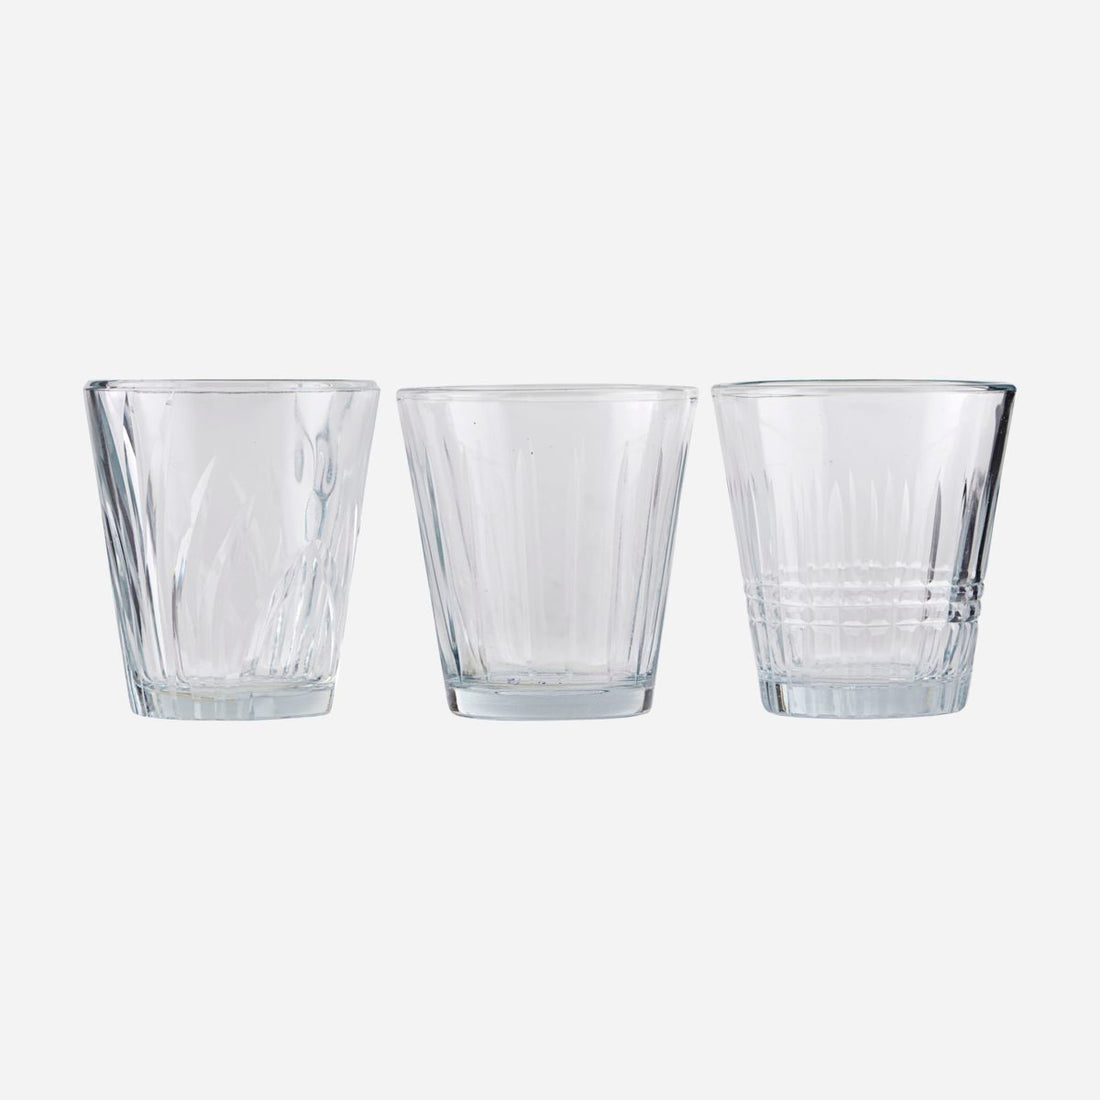 House Doctor Glass, Vintage, Clear-H: 8.5 cm, DIA: 7.5 cm